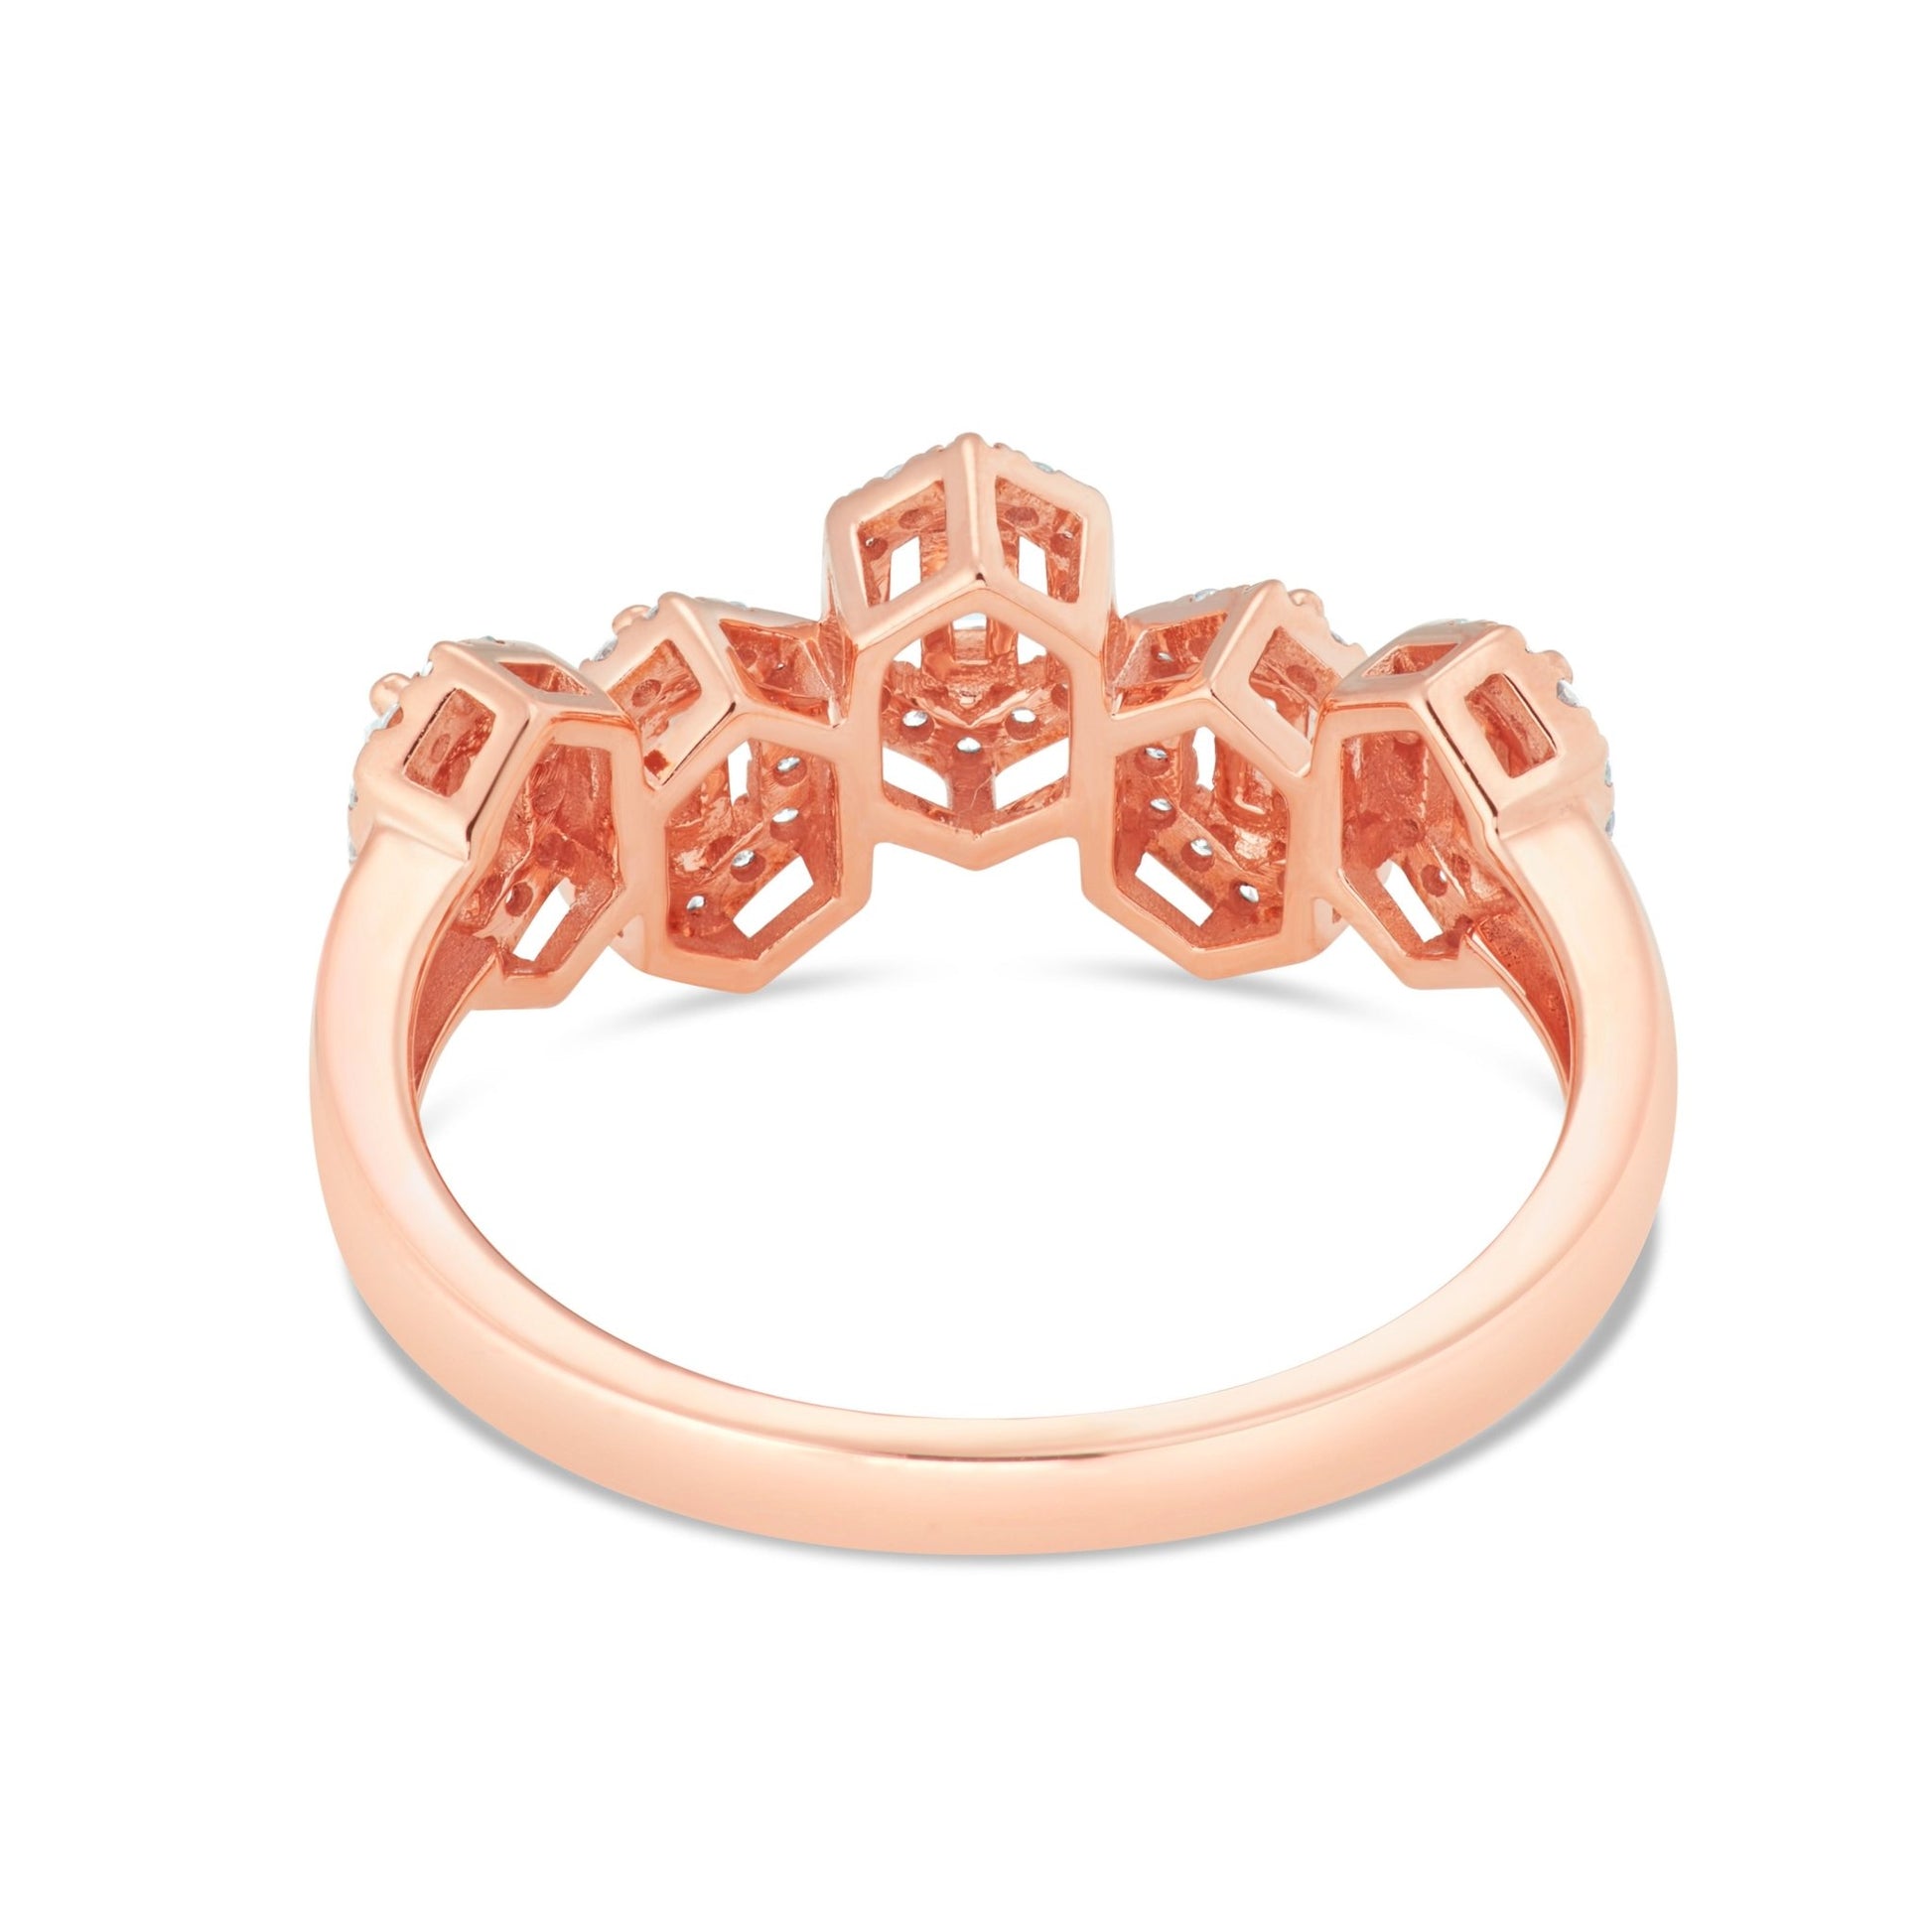 Diamond Fashion Ring - Shyne Jewelers Rose Gold 4 Shyne Jewelers